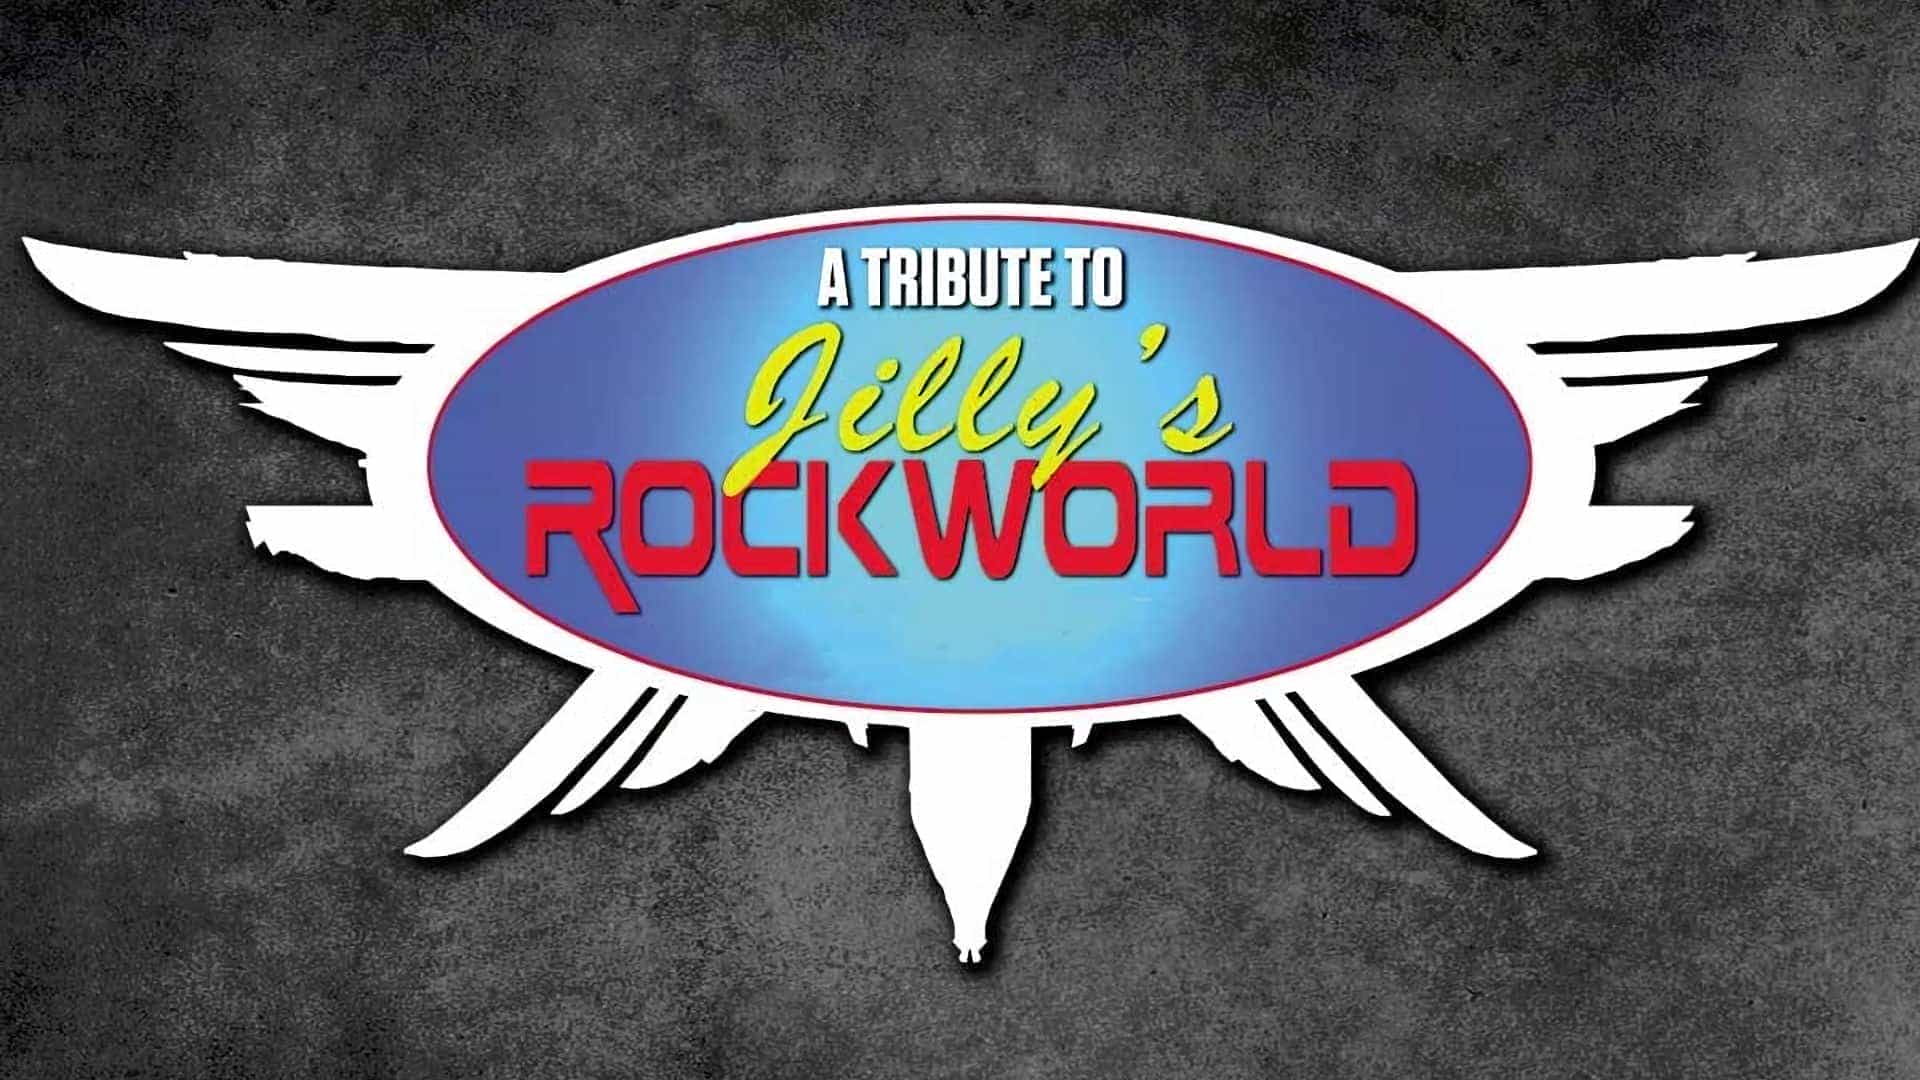 A Tribute to Jilly's Rockworld